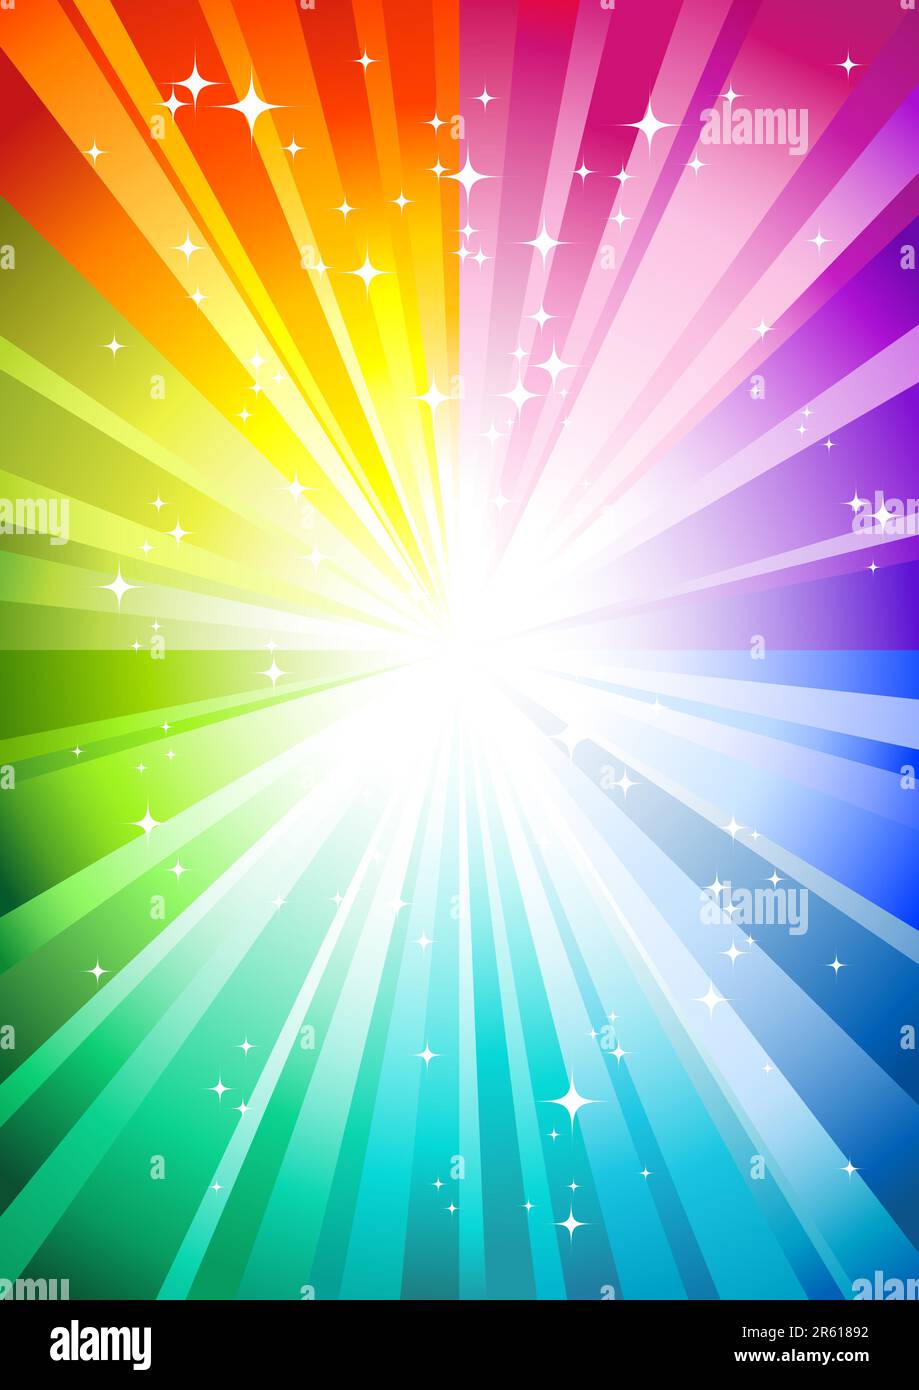 rainbow sunburst background with glittering stars Stock Vector Image ...